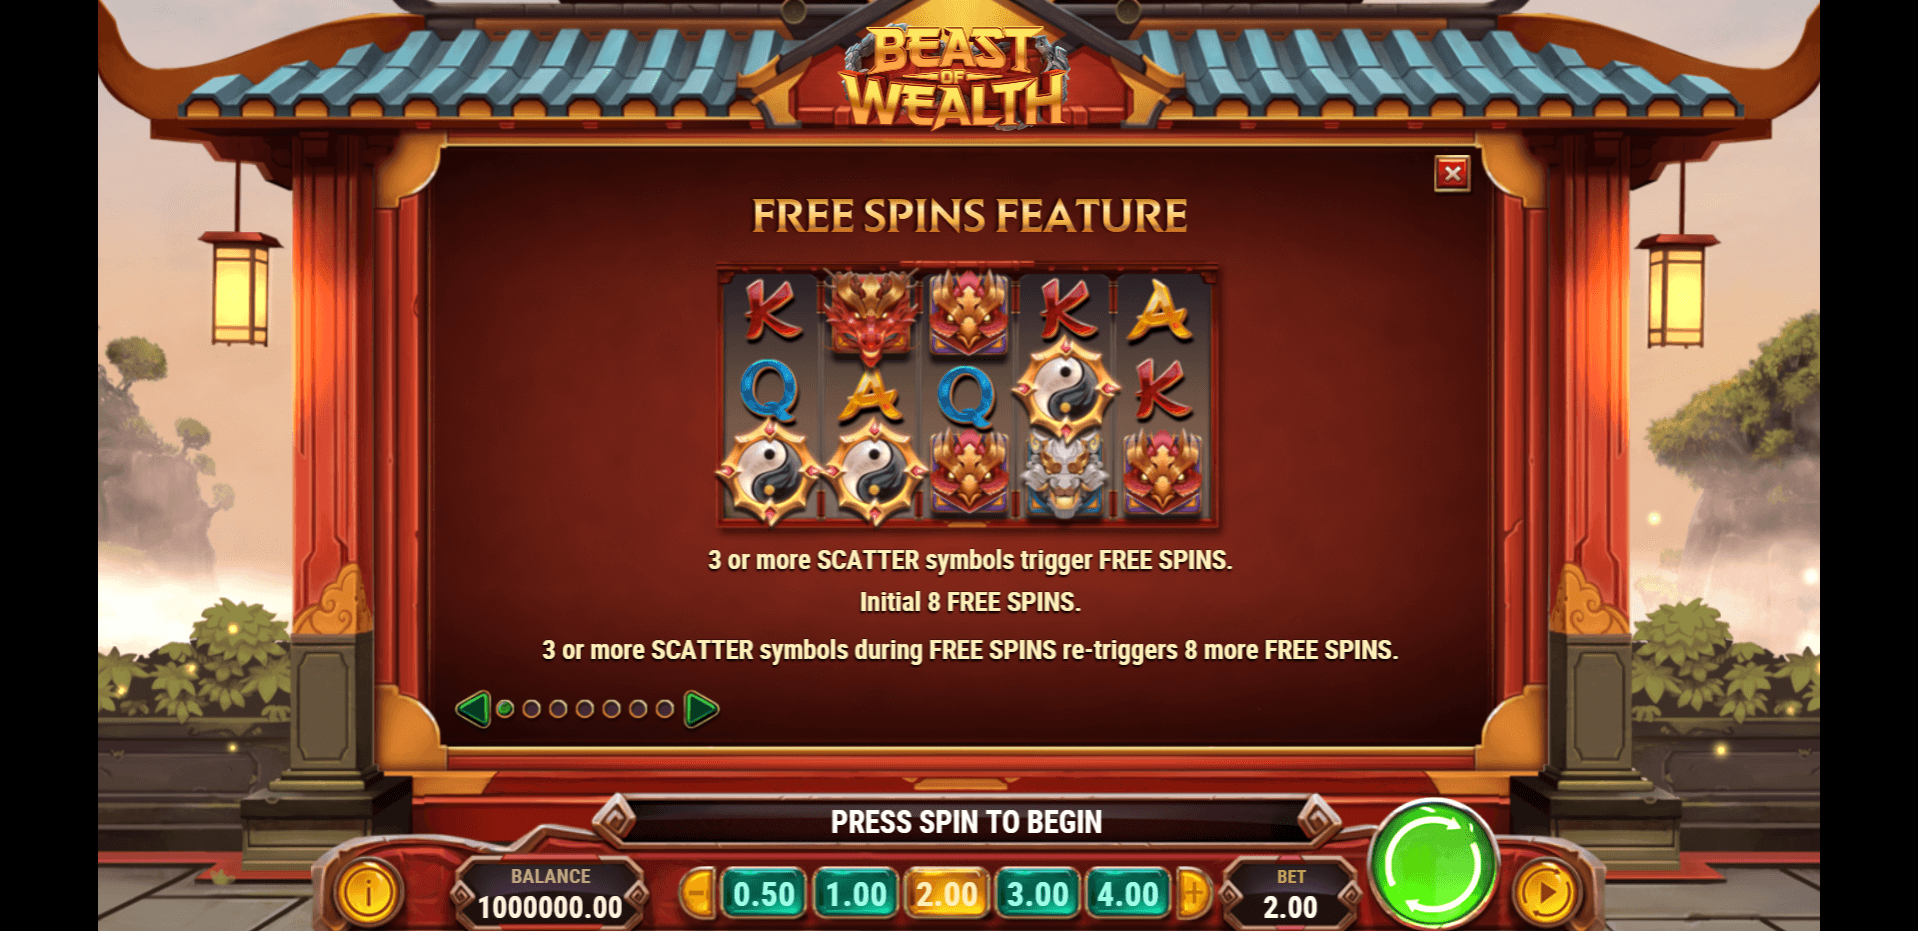 beast of wealth slot machine detail image 0